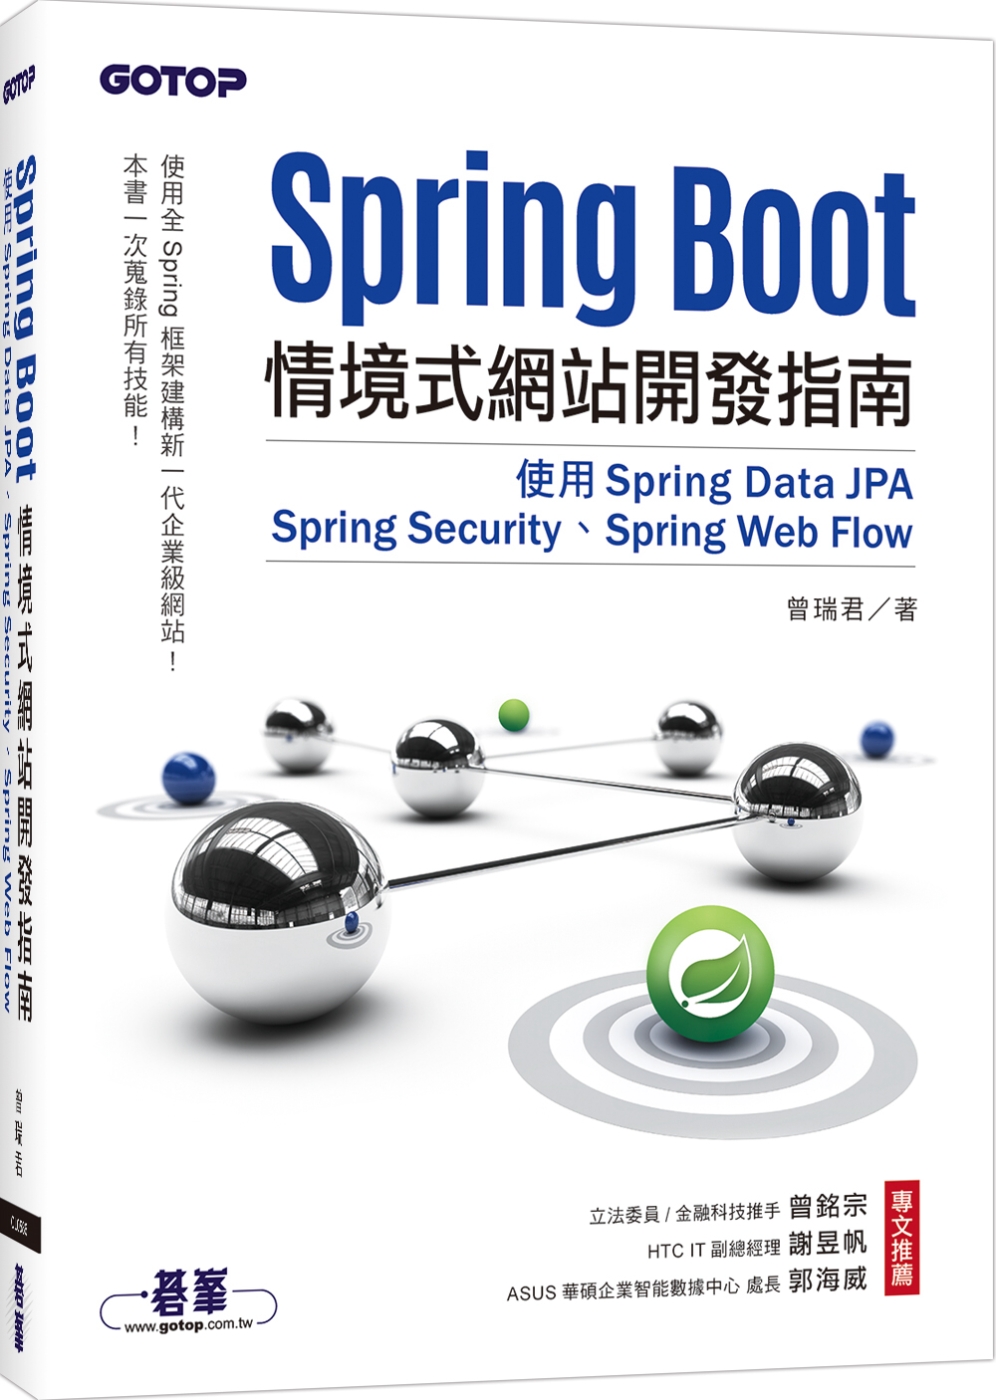 Spring Boot情境式網站開發指南：使用Spring Data JPA、Spring Security、Spring Web Flow